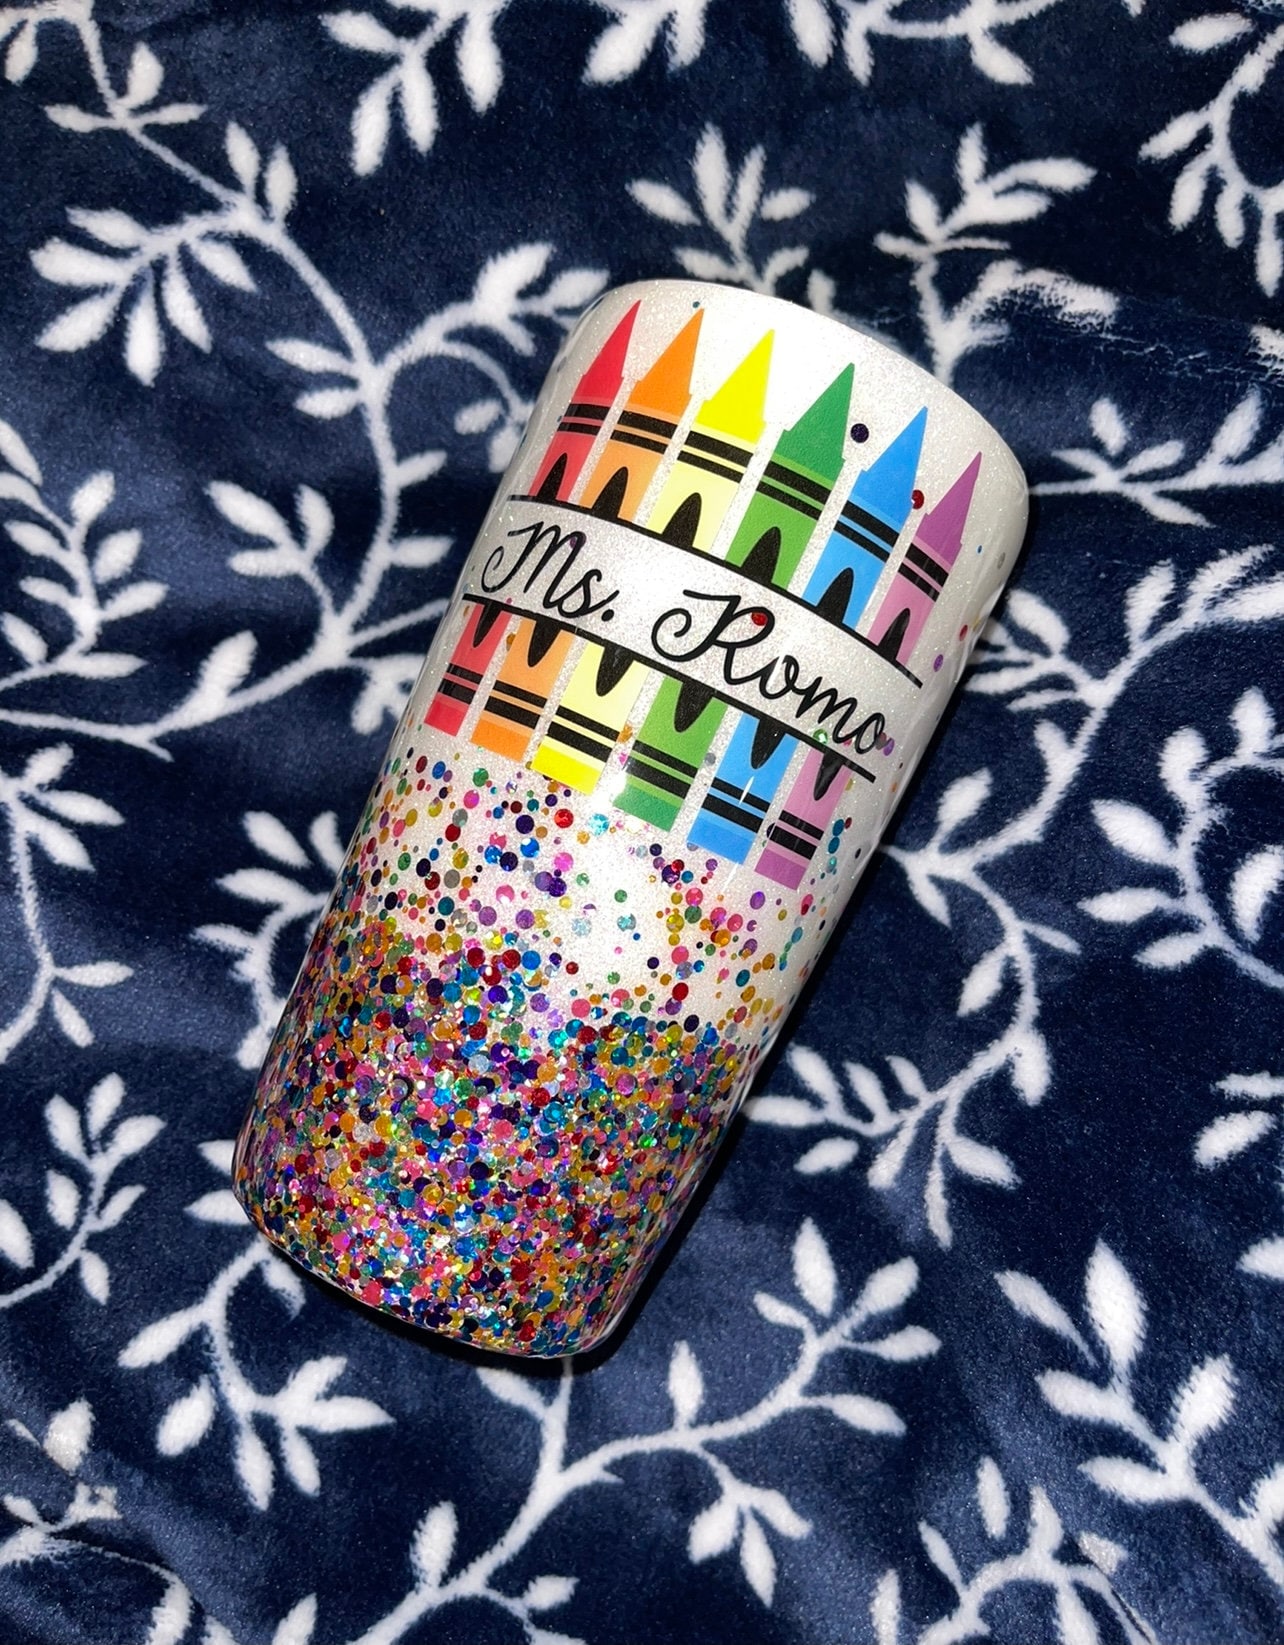 Crayon Glitter Custom Name Teacher Sublimation Tumbler Print – A+J